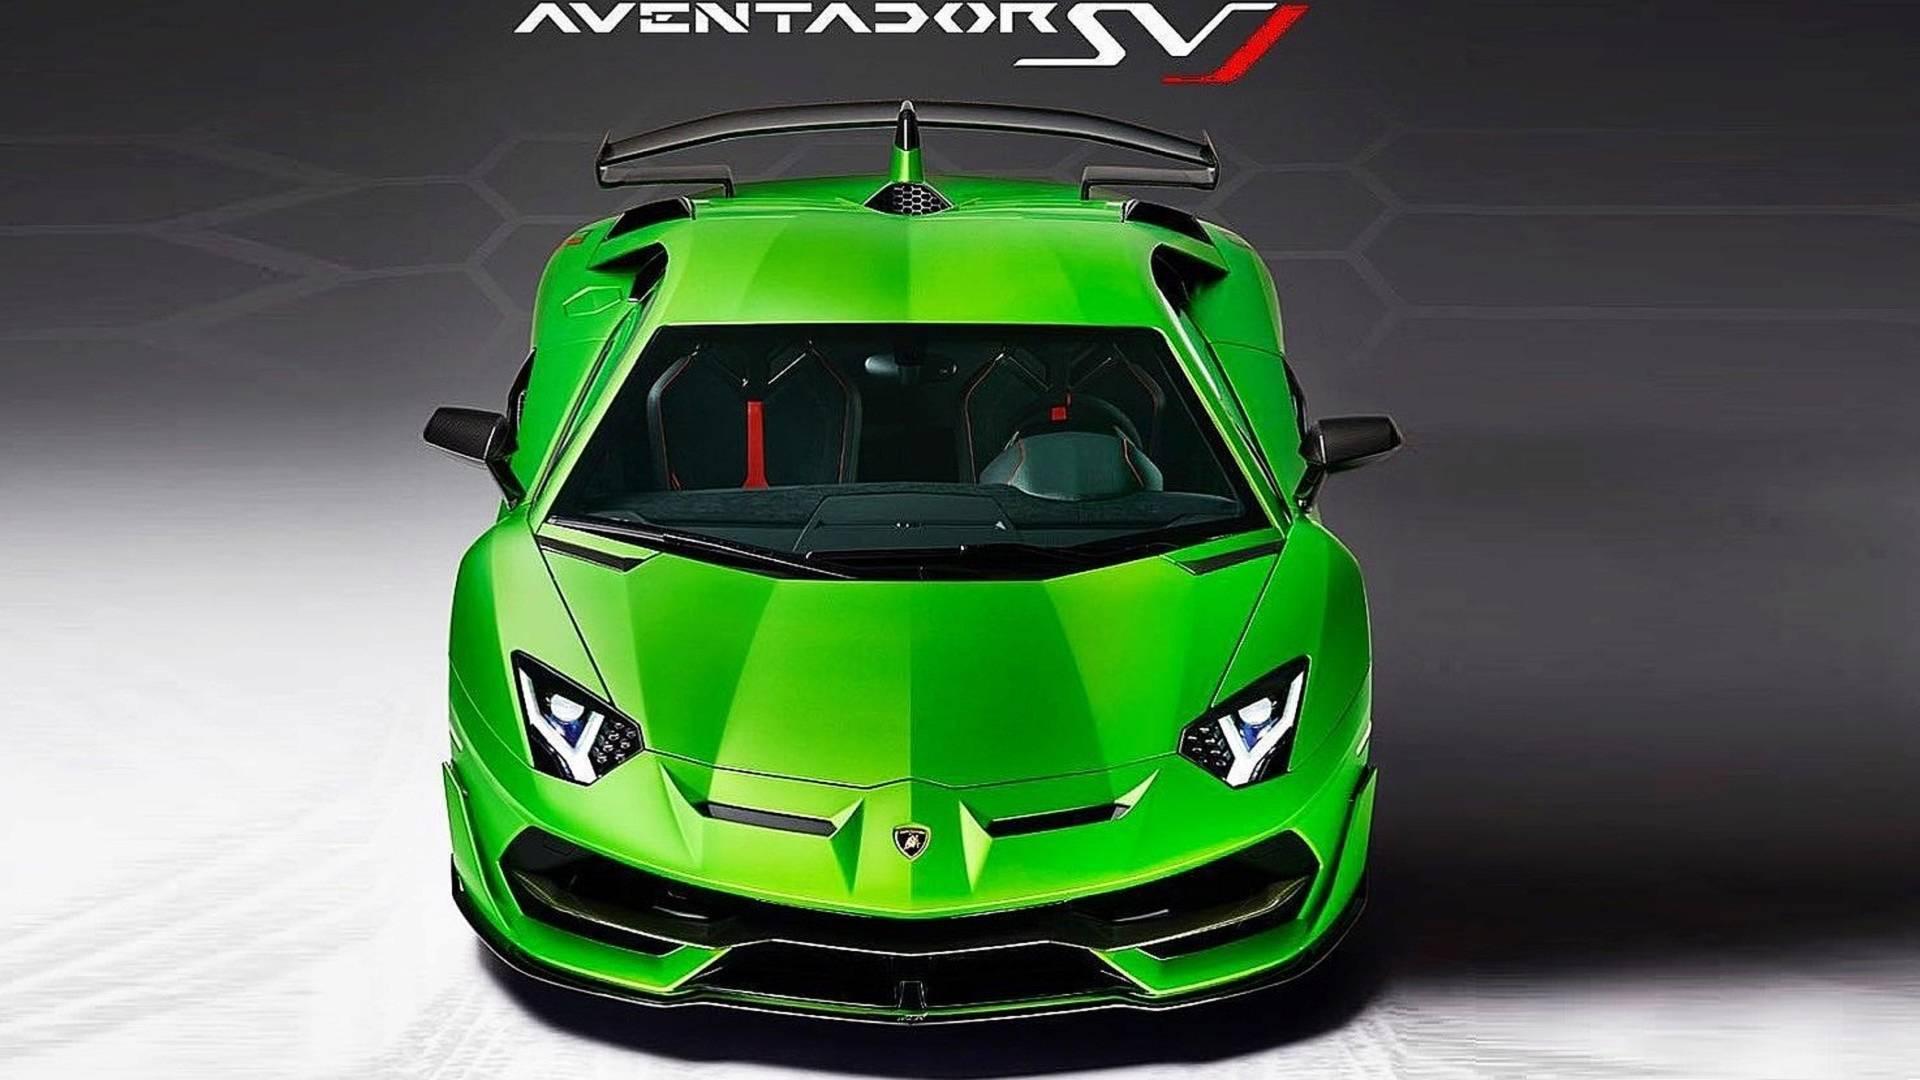 Lamborghini Aventador SVJ 0-60, quarter mile, acceleration times -  